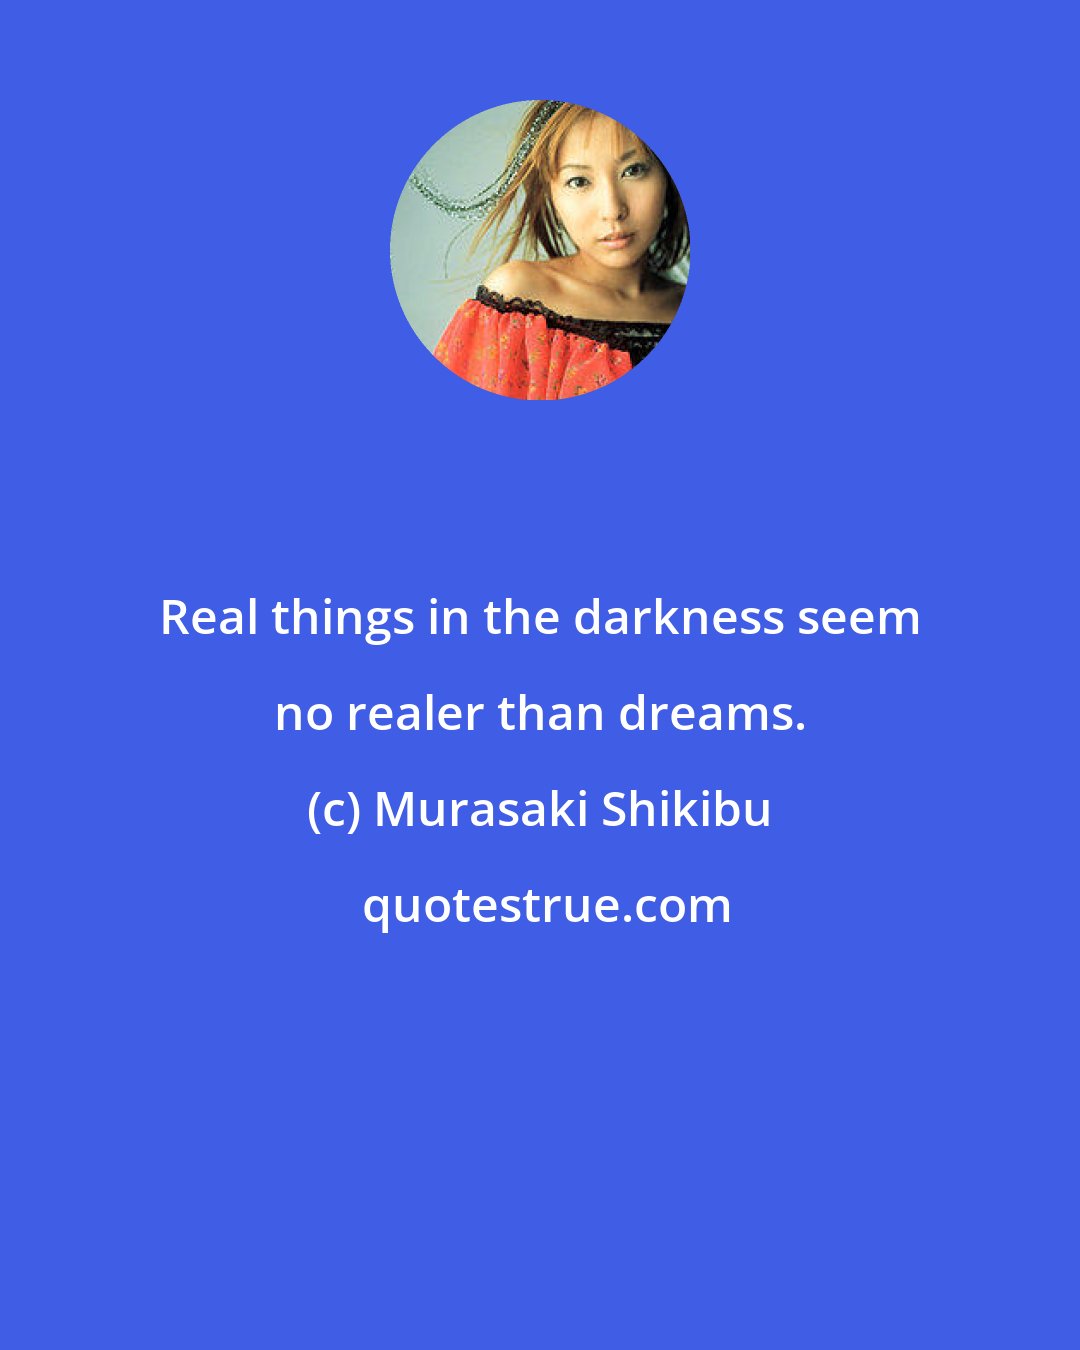 Murasaki Shikibu: Real things in the darkness seem no realer than dreams.